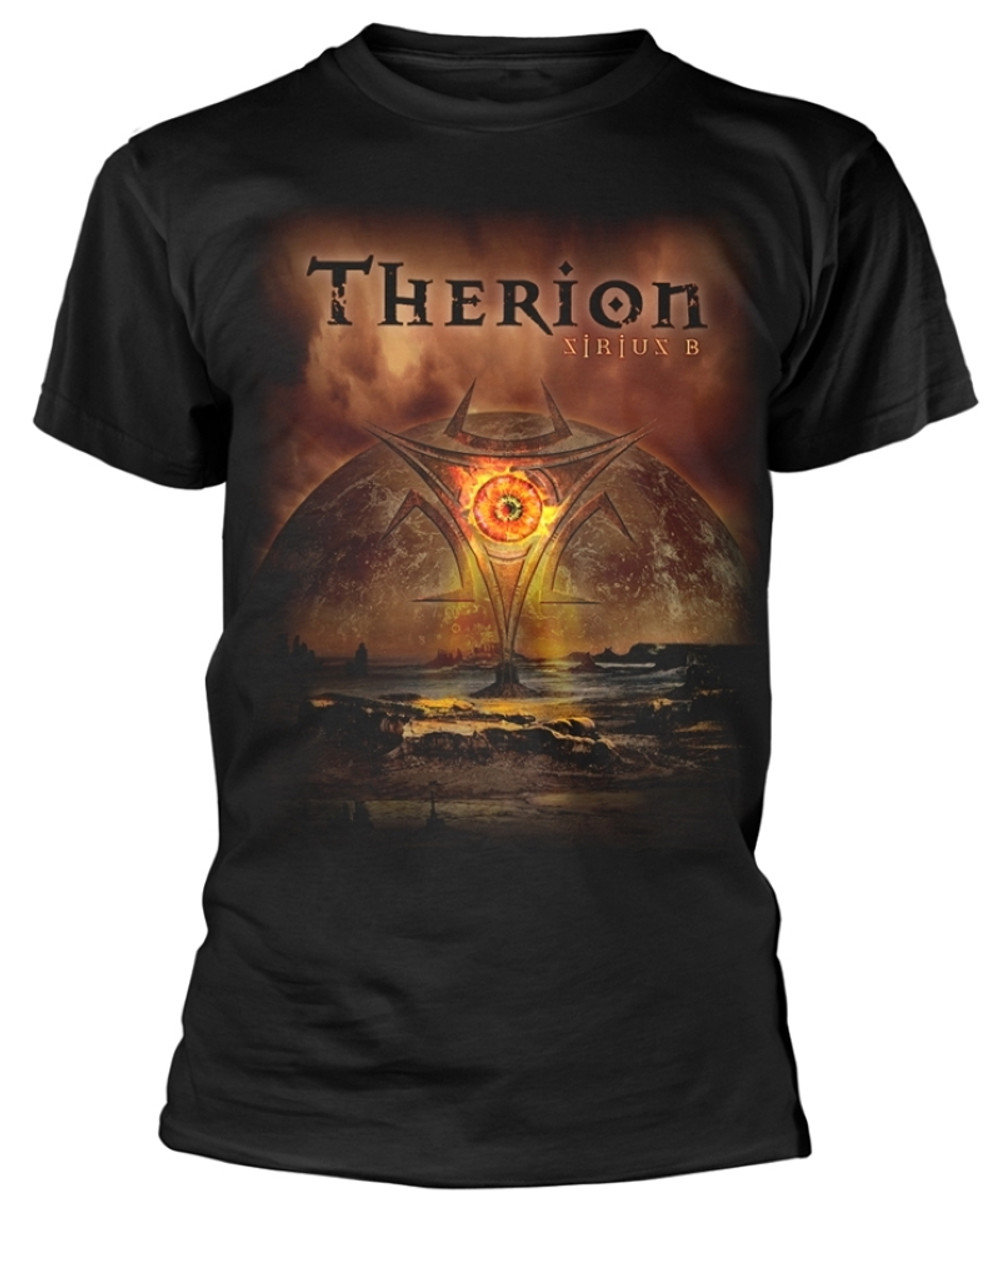 Therion 'Sirius B' (Black) T-Shirt